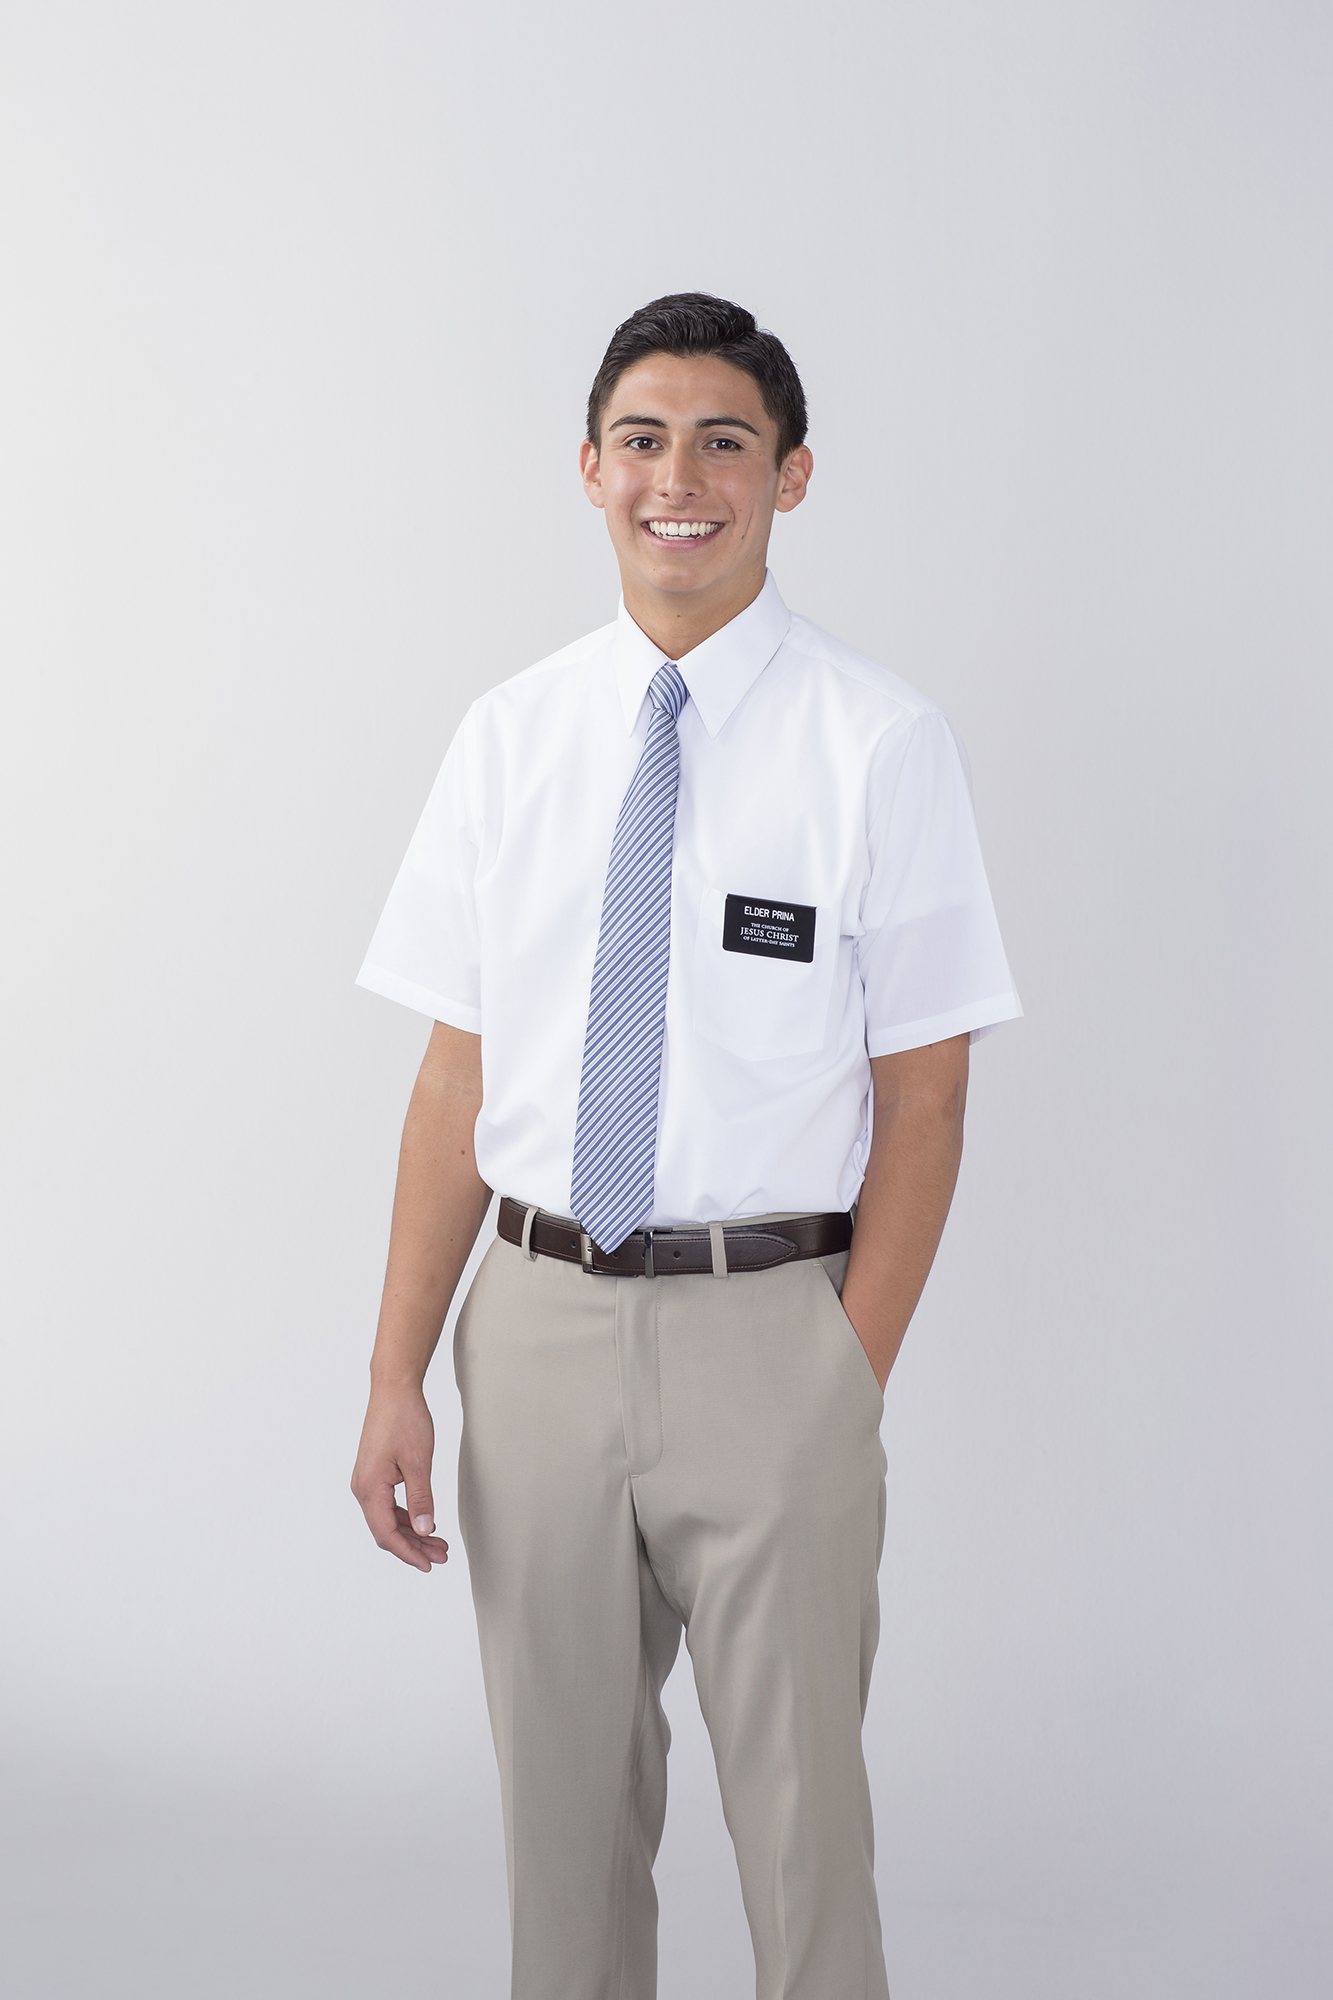 mormon dress code